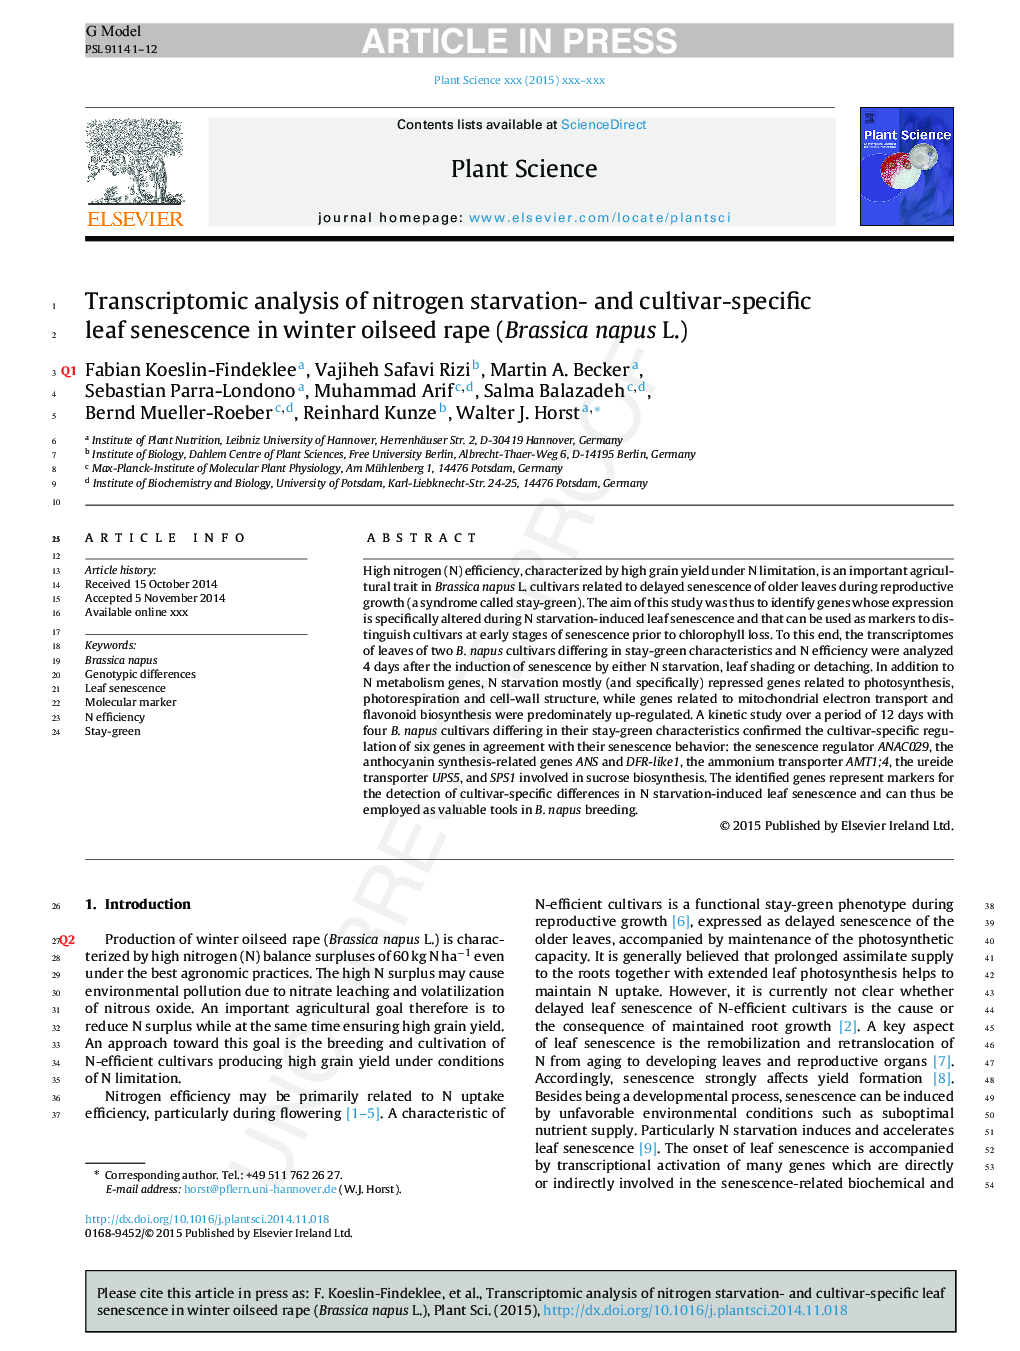 Transcriptomic analysis of nitrogen starvation- and cultivar-specific leaf senescence in winter oilseed rape (Brassica napus L.)